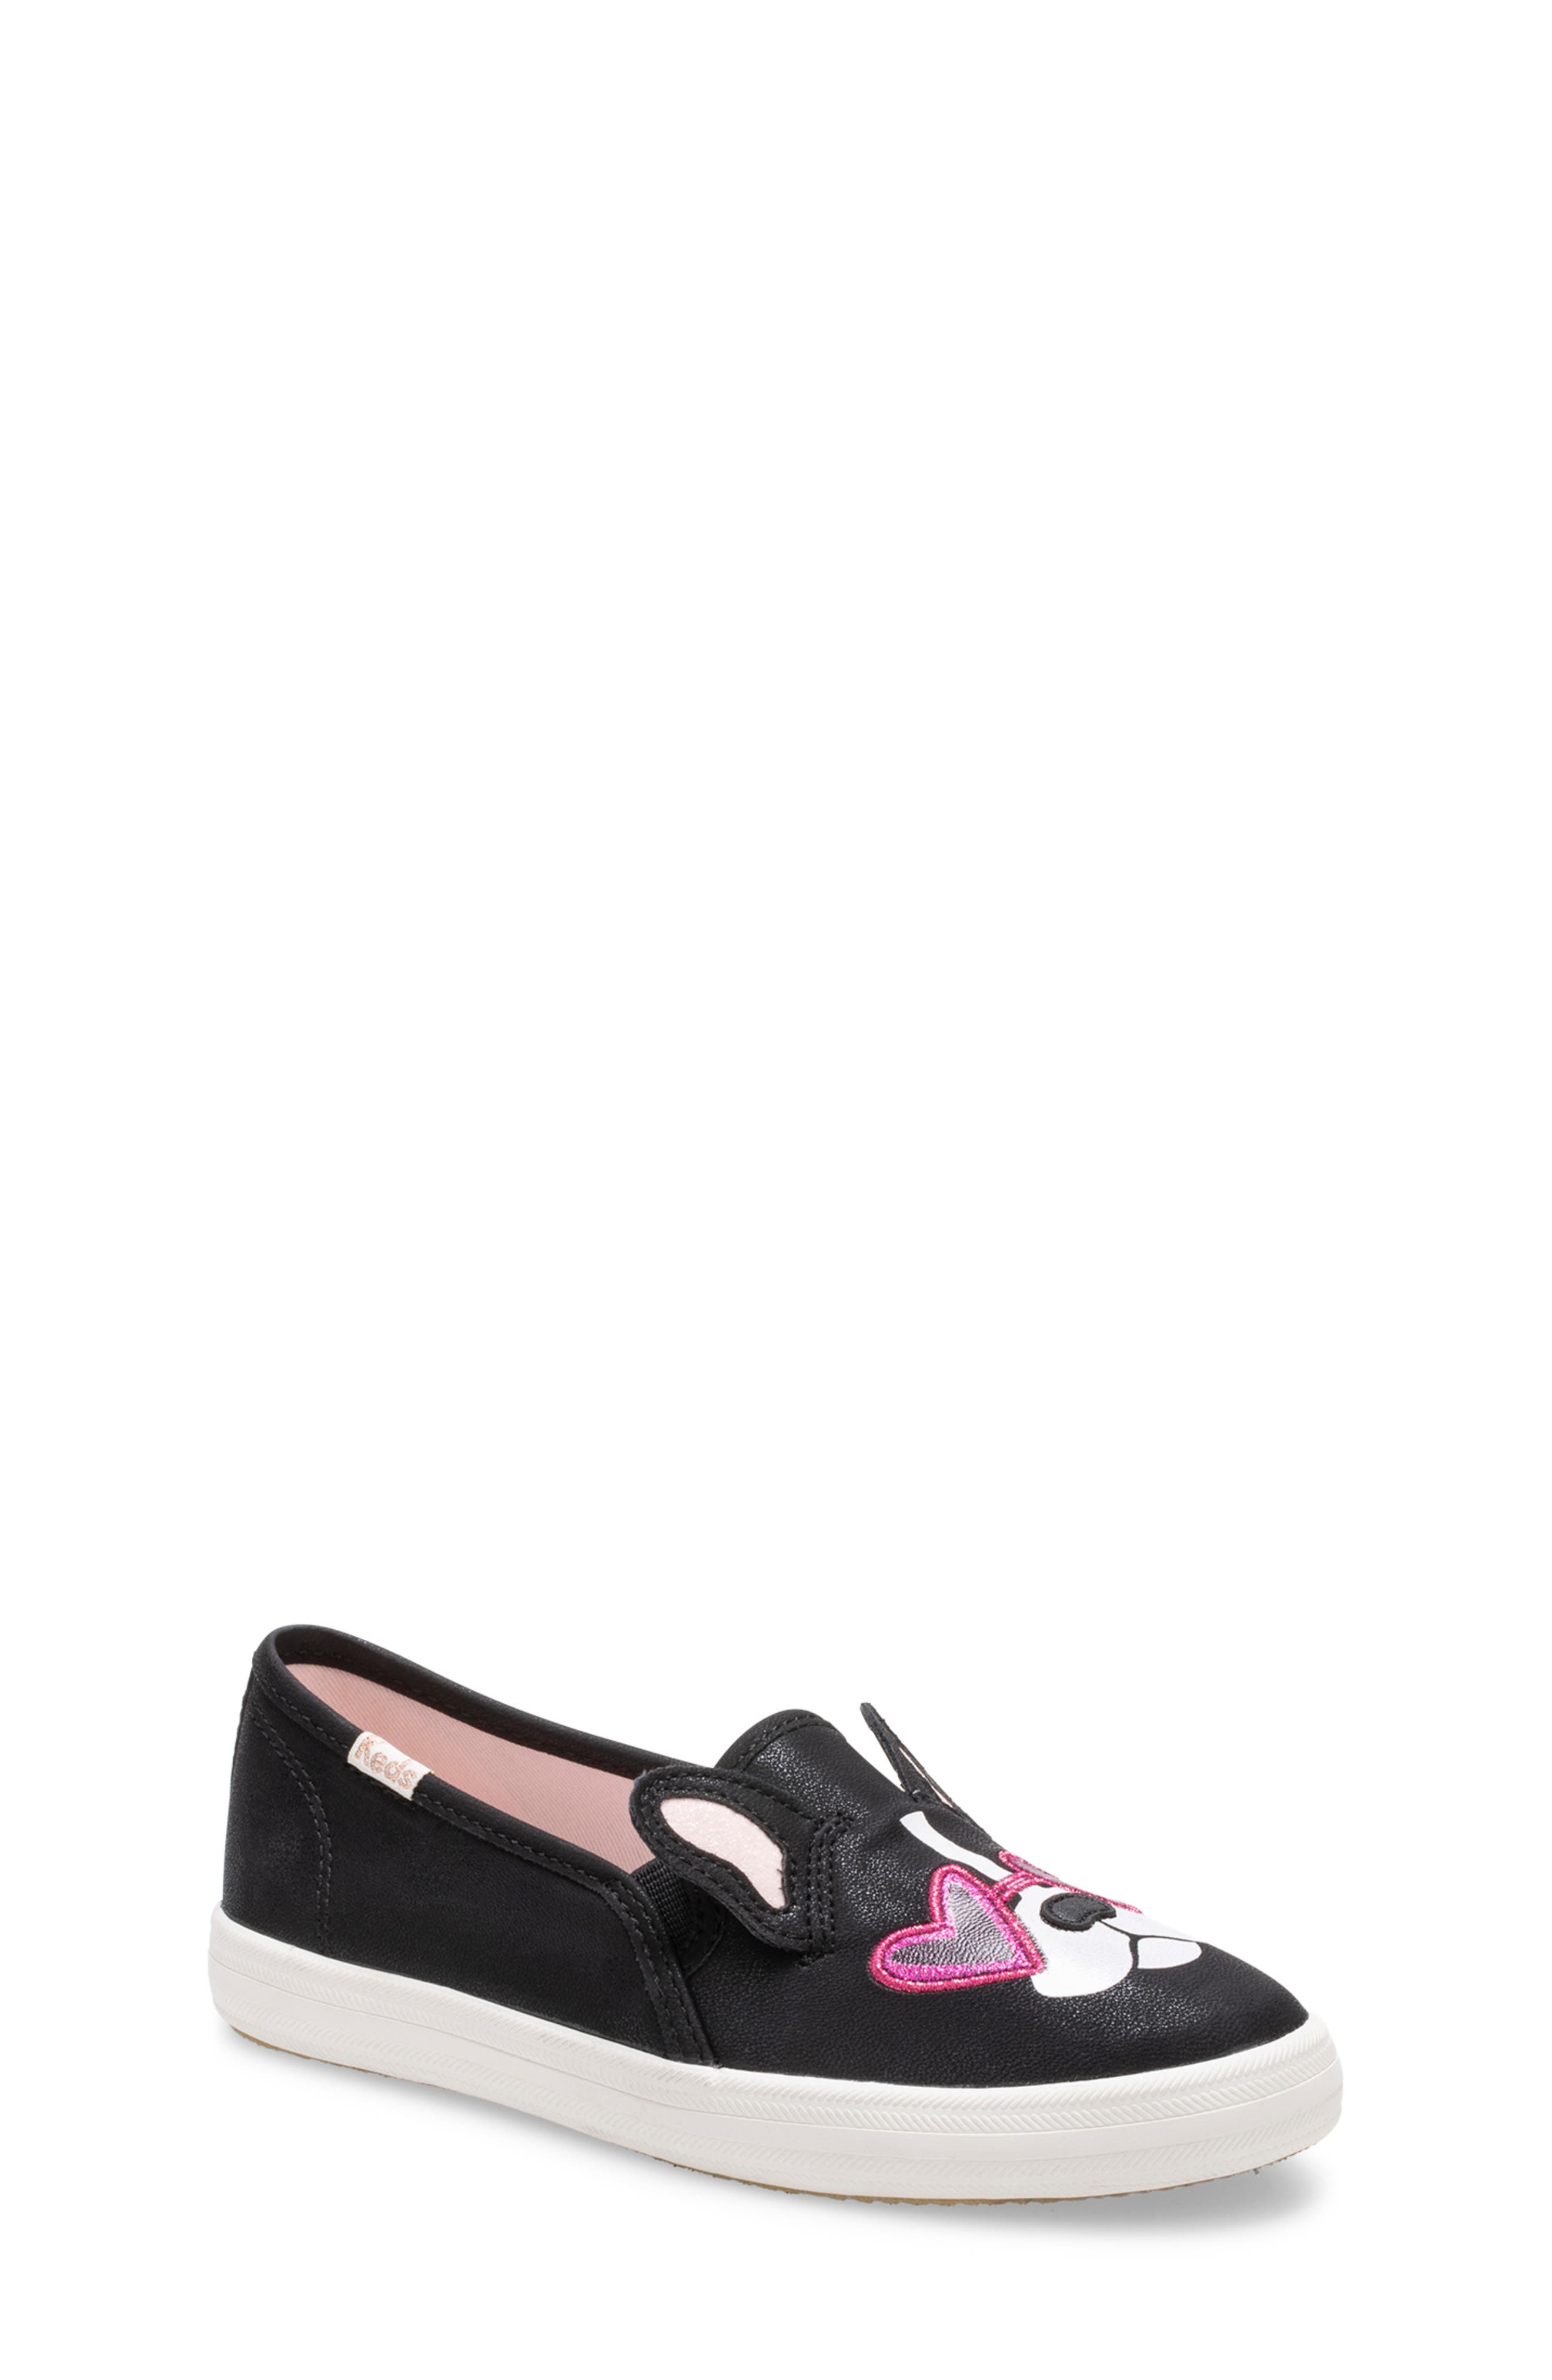 Toddler Girls' Keds® Shoes (Sizes 7.5-12)